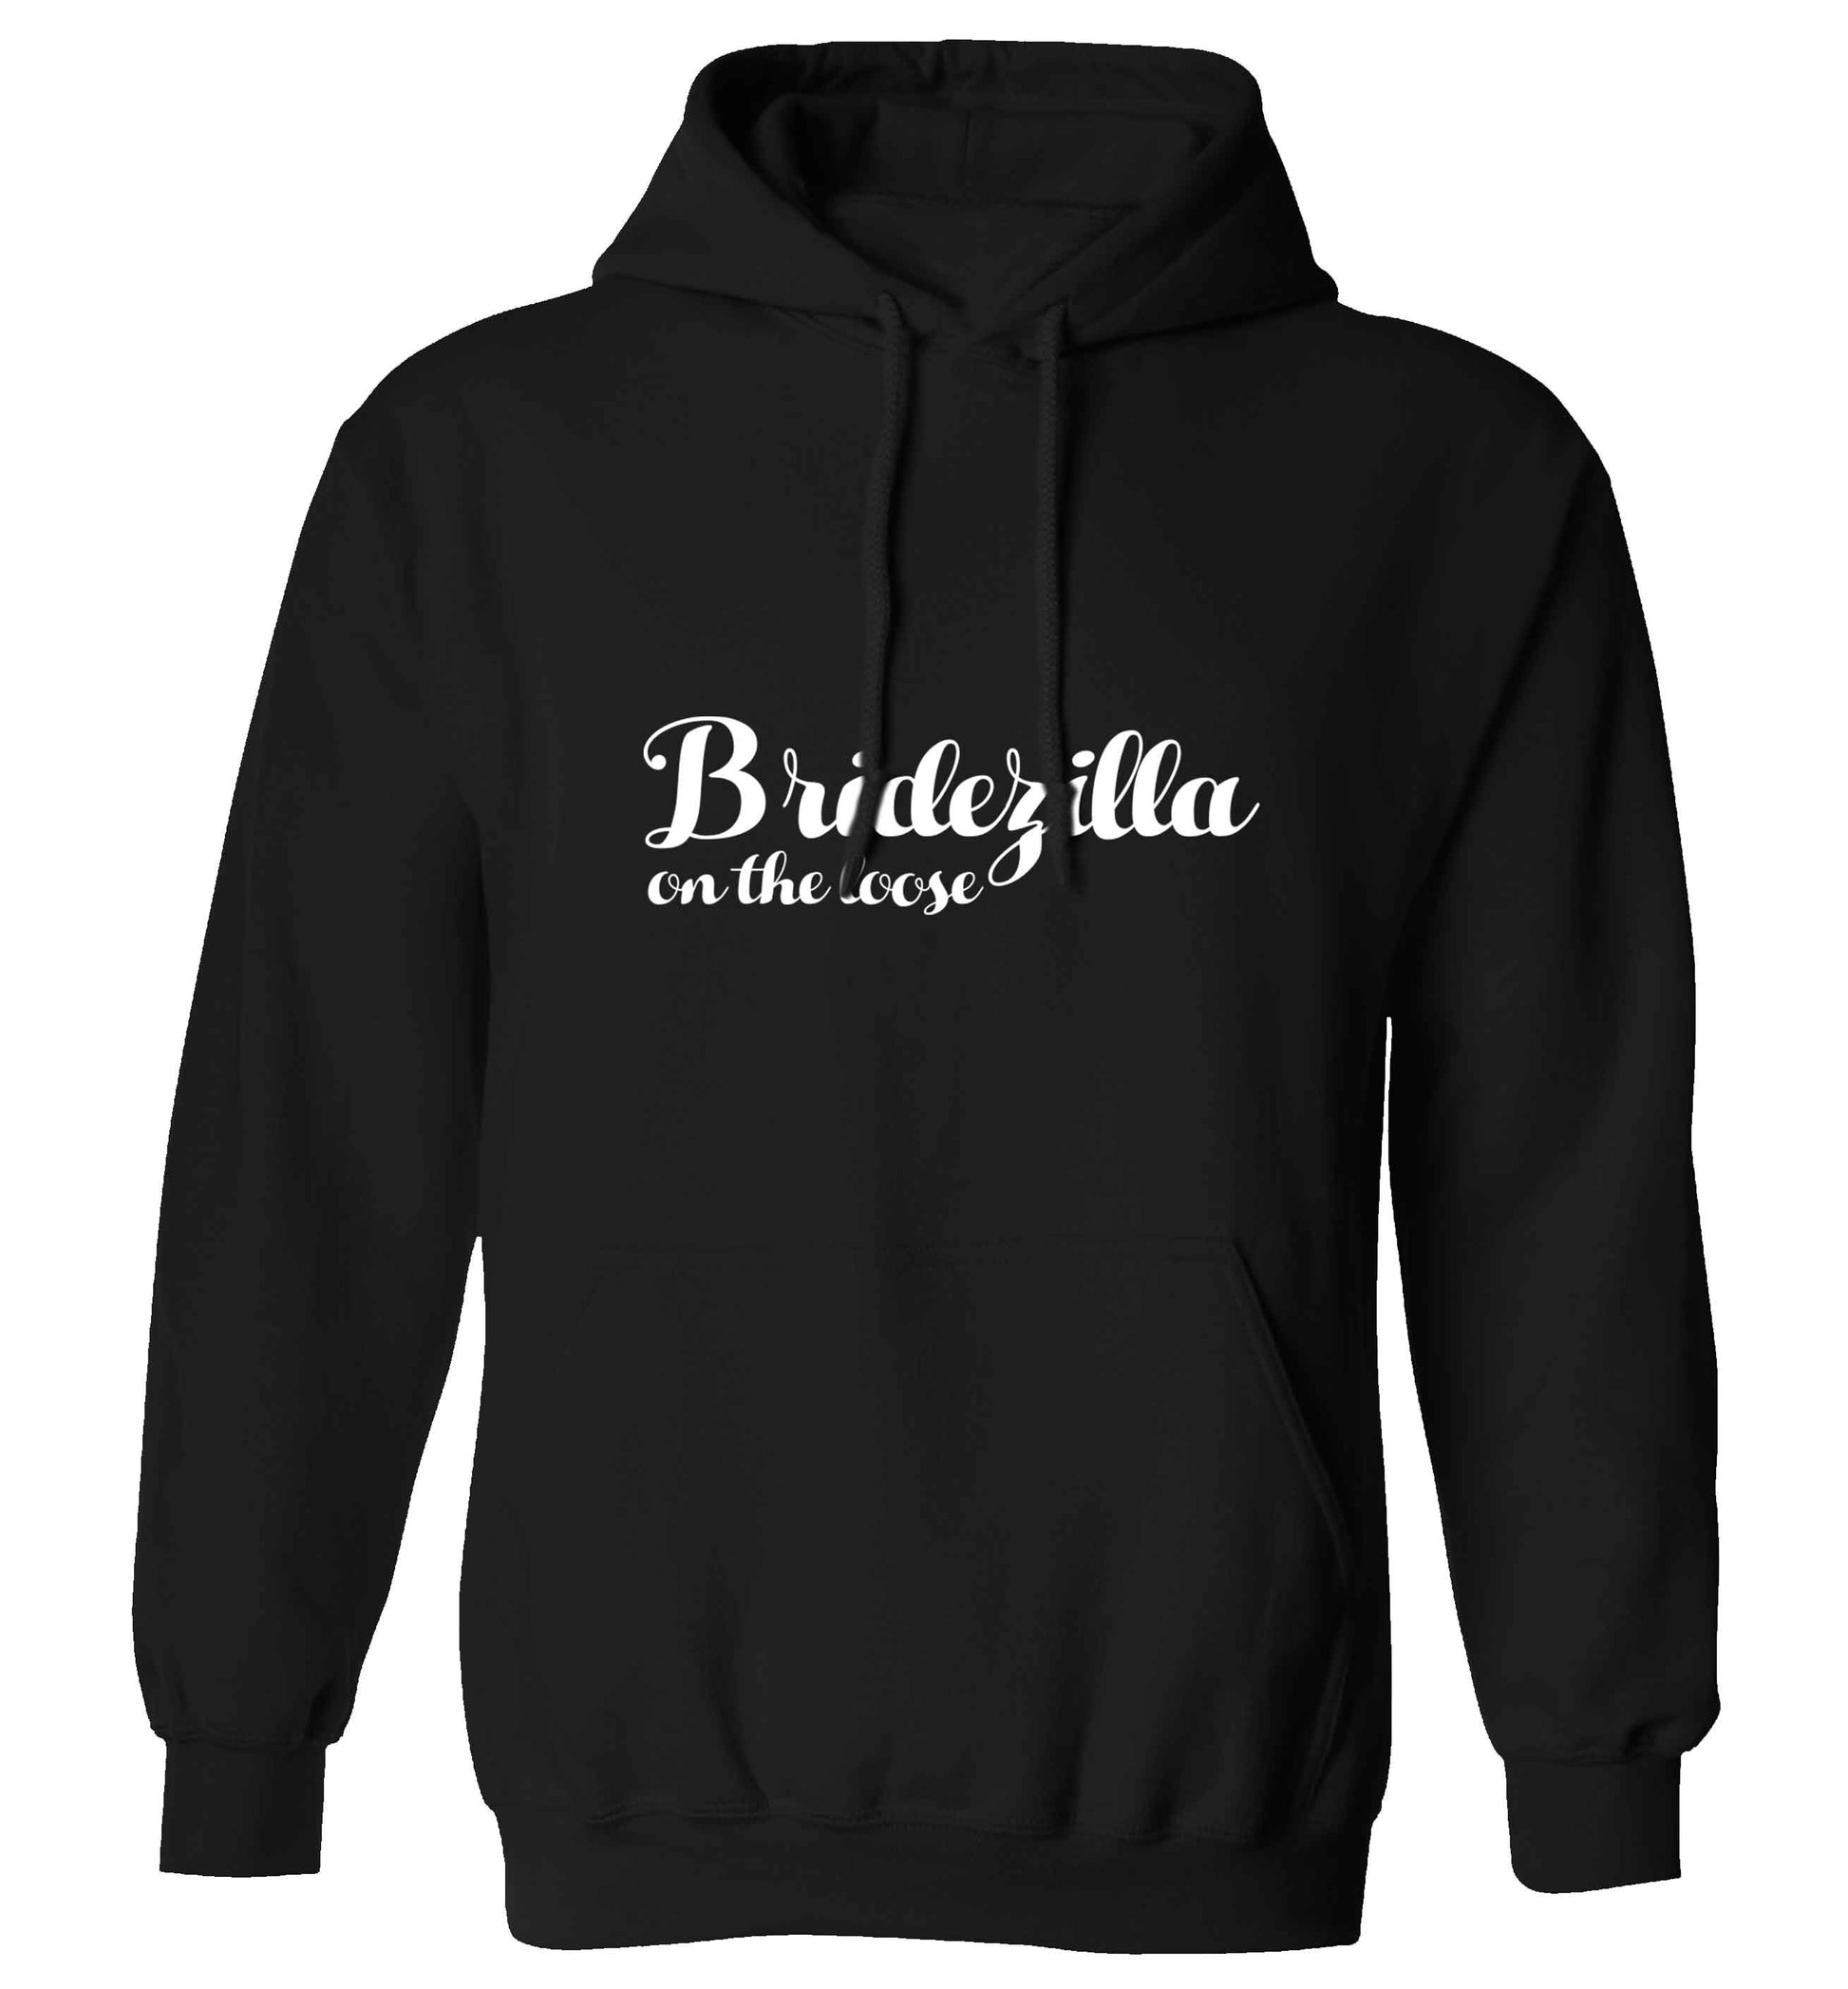 Bridezilla on the loose adults unisex black hoodie 2XL